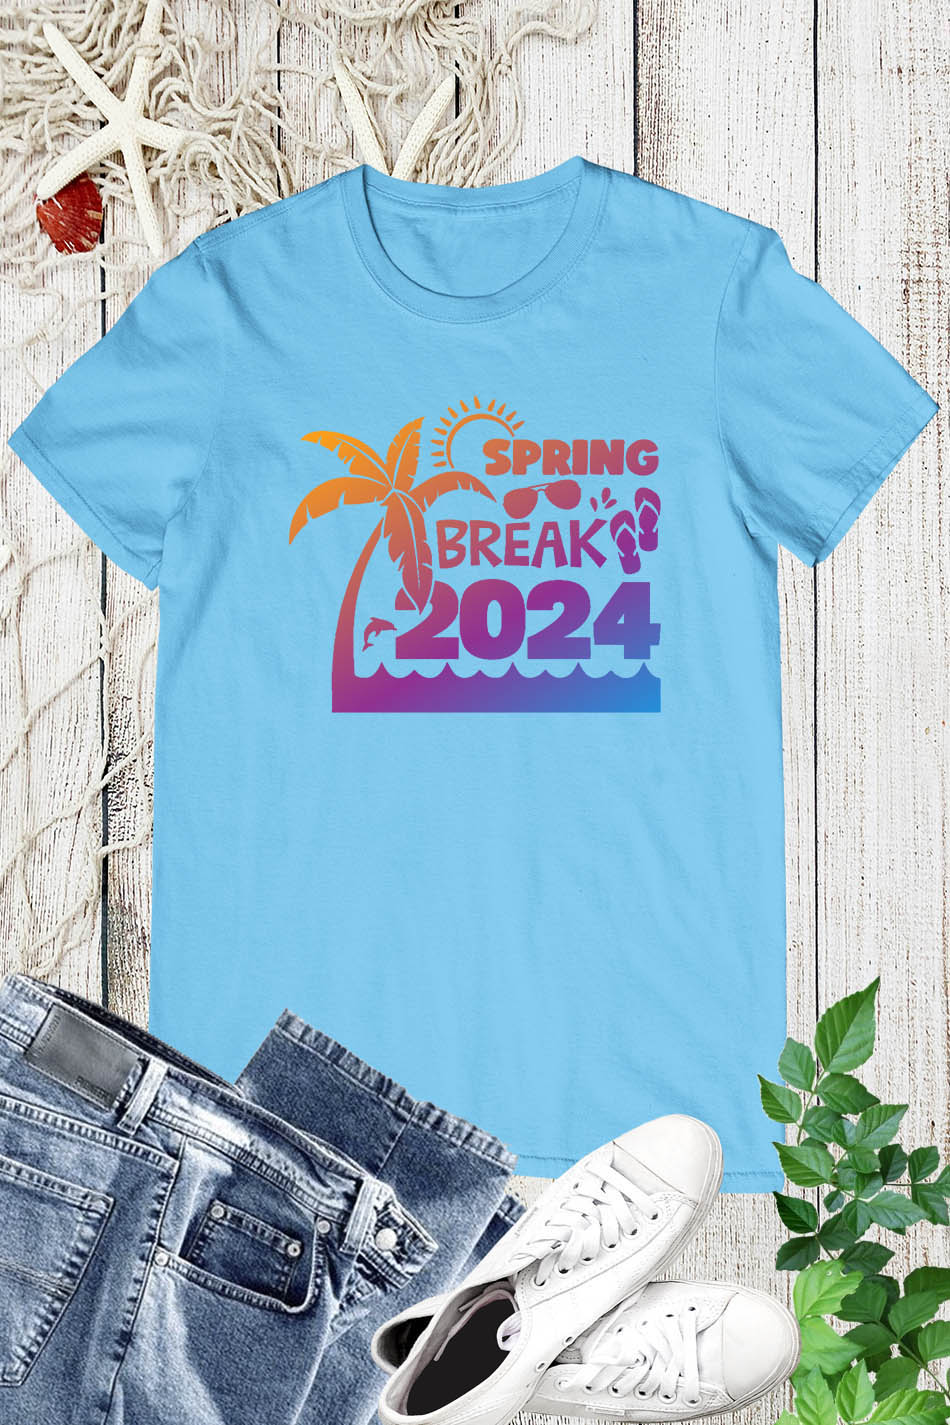 Spring Break 2024 Shirts